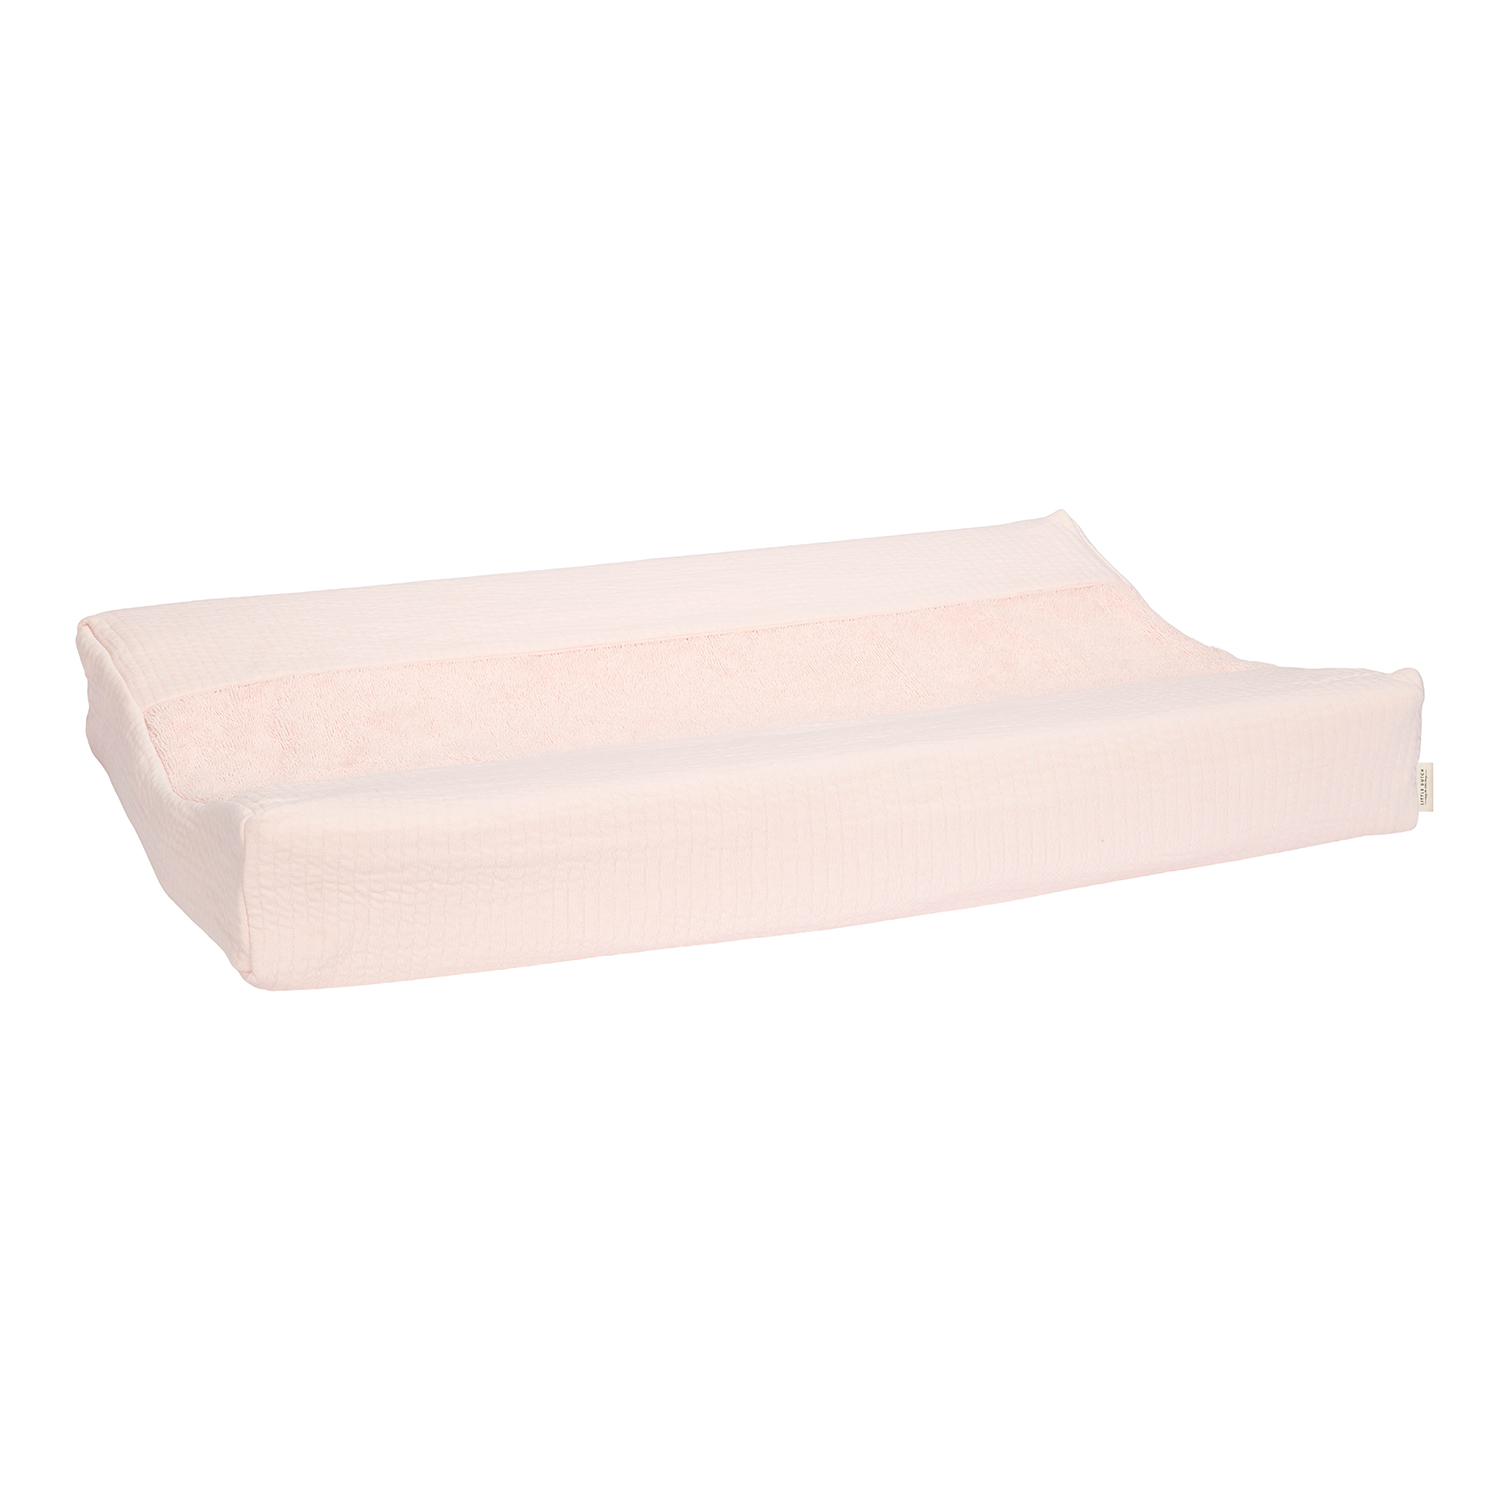 Wickelauflagenbezug Pure soft pink (45x70 cm)